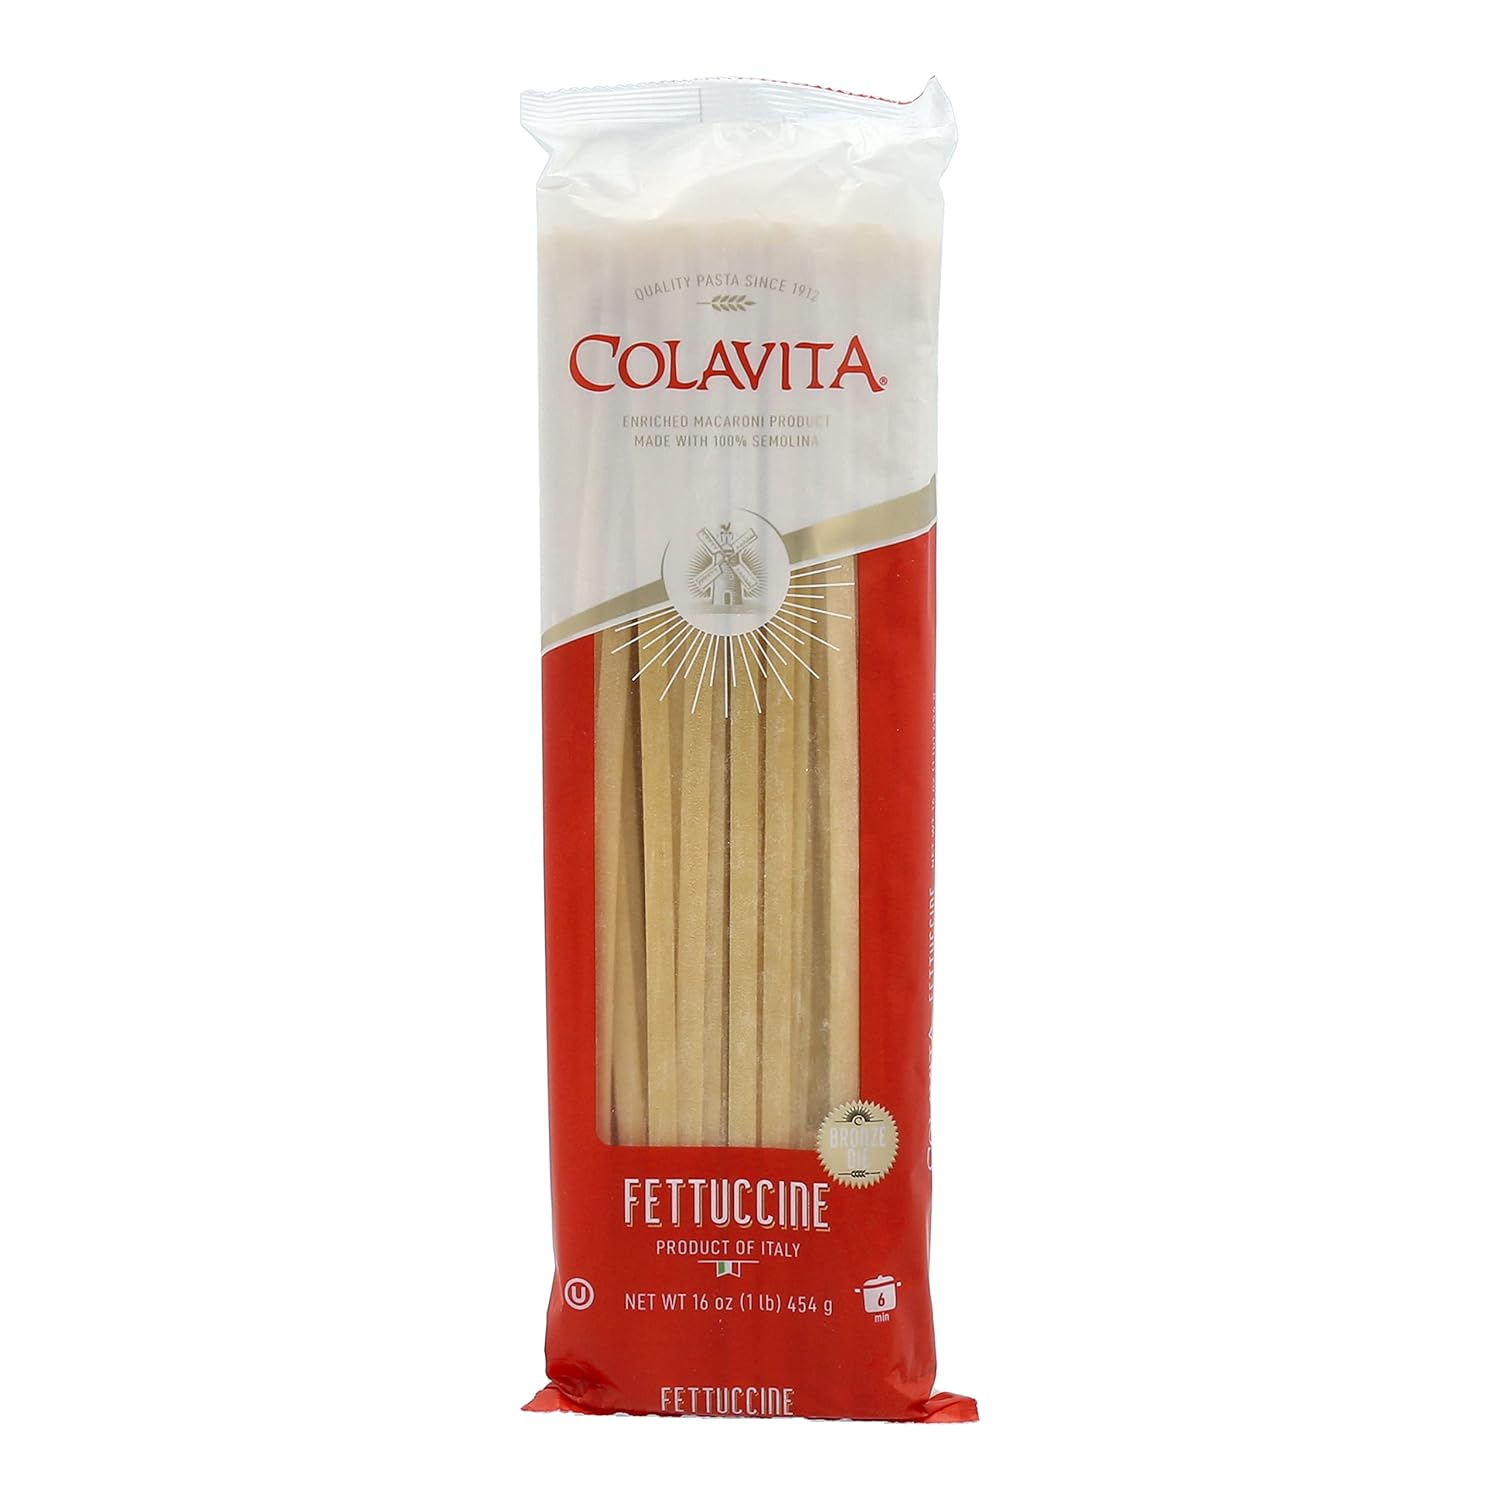 Colavita Pasta - Fettuccine, 1 Pound - Pack of 20